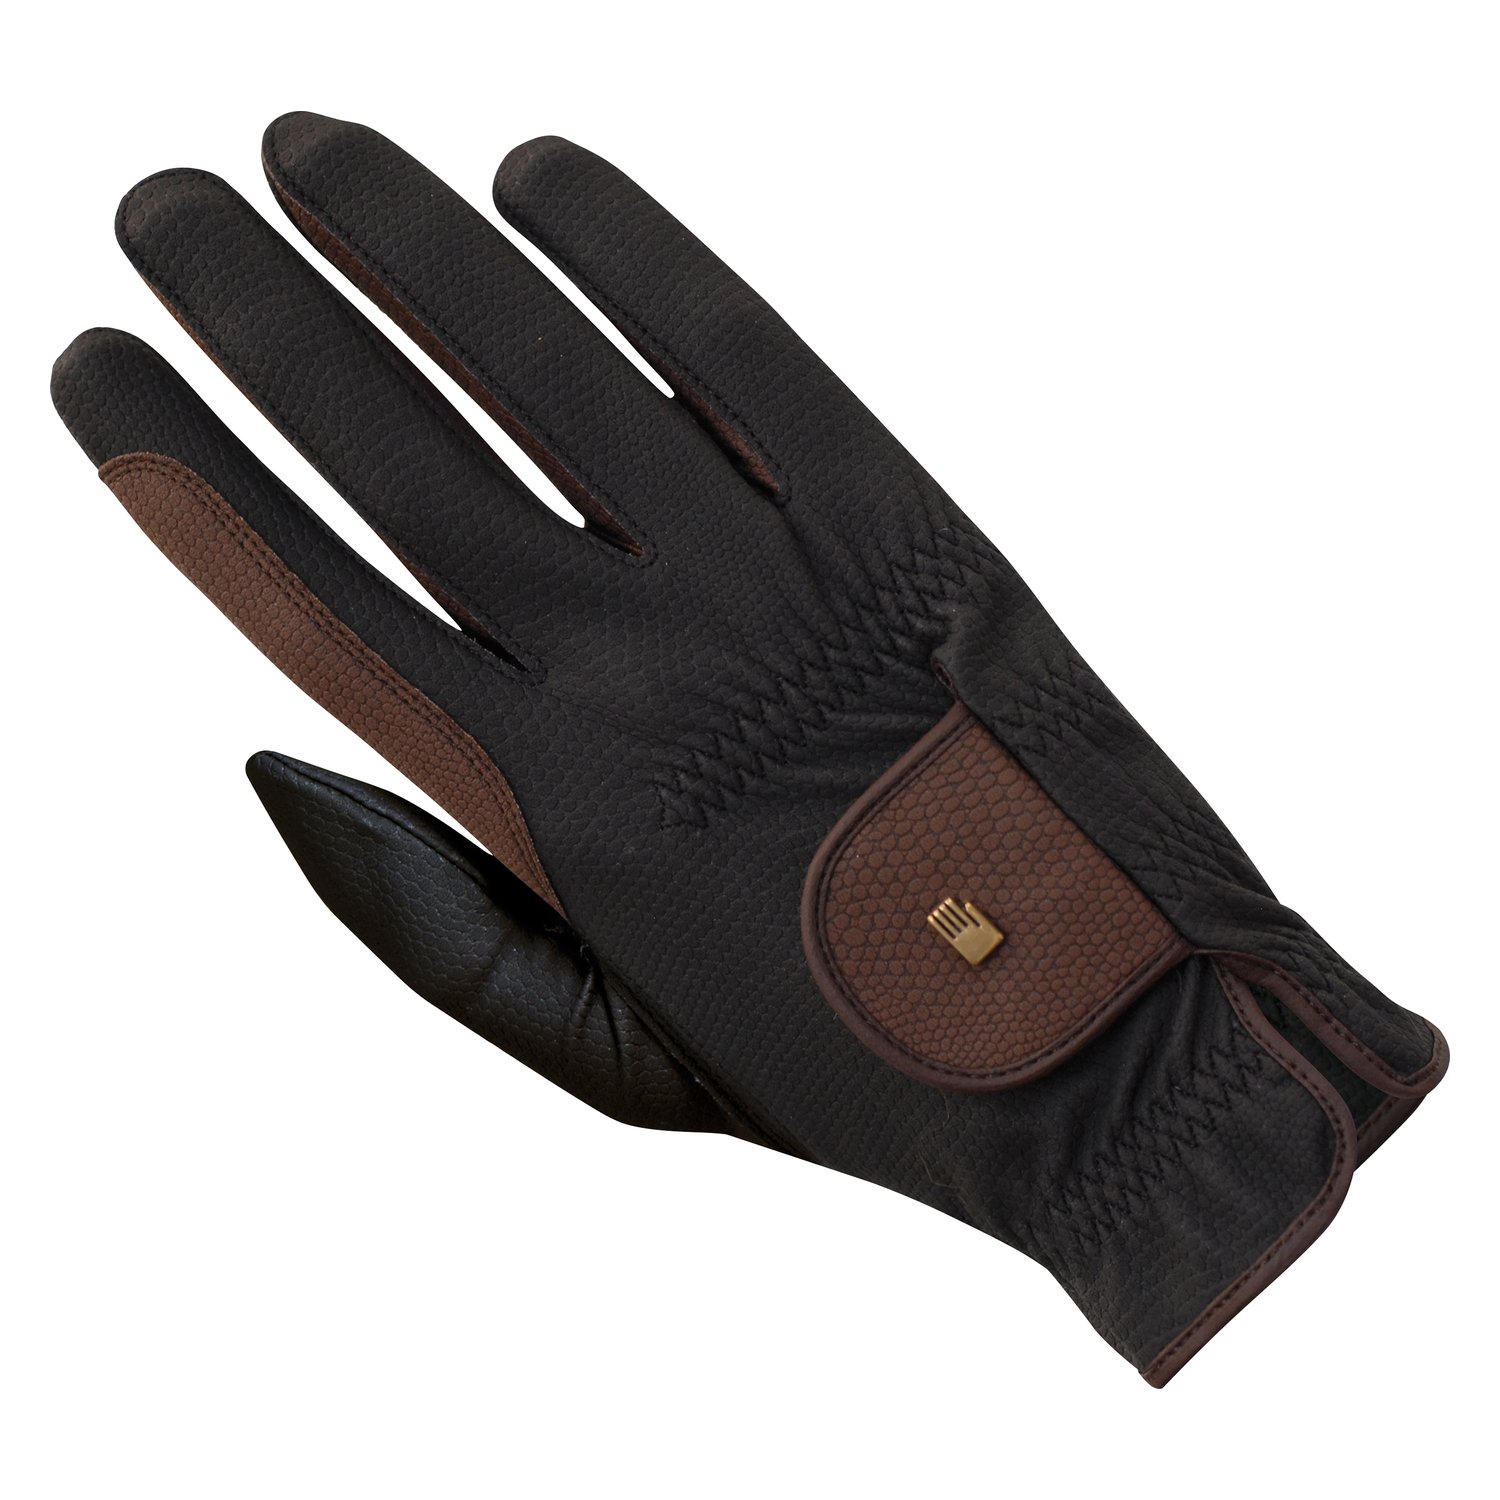 Roeckl Handschuhe Malta Winter schwarz/mokka | 10,5